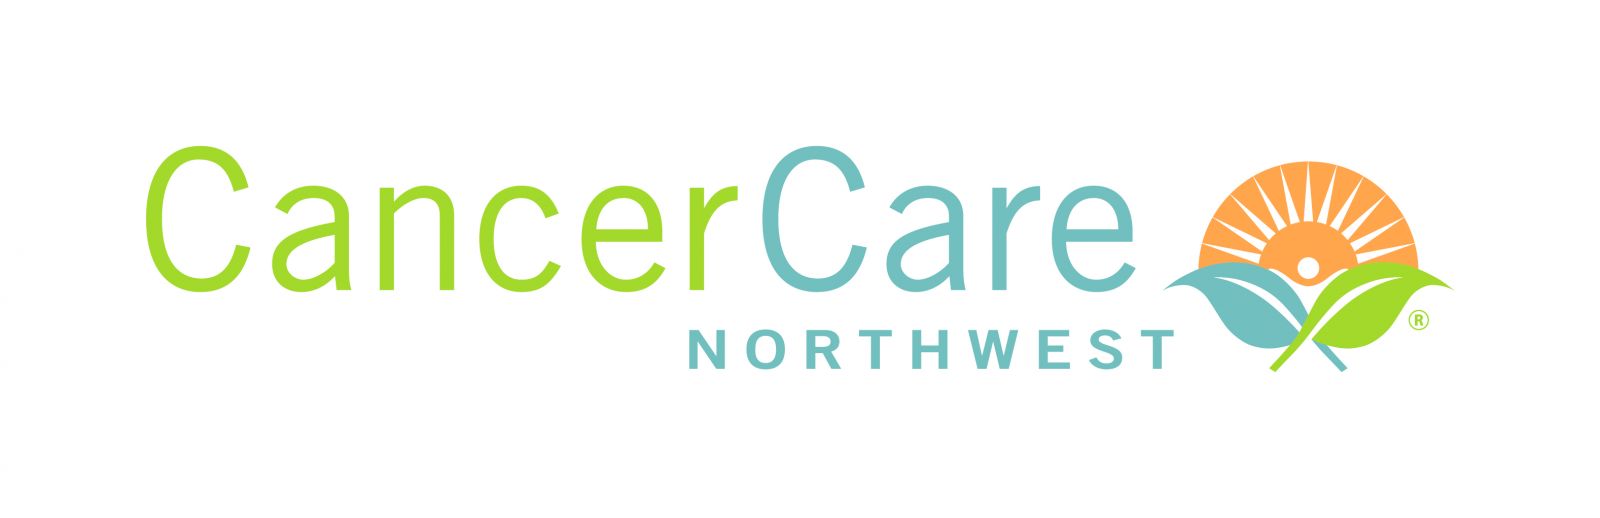 CancerCare Northwest